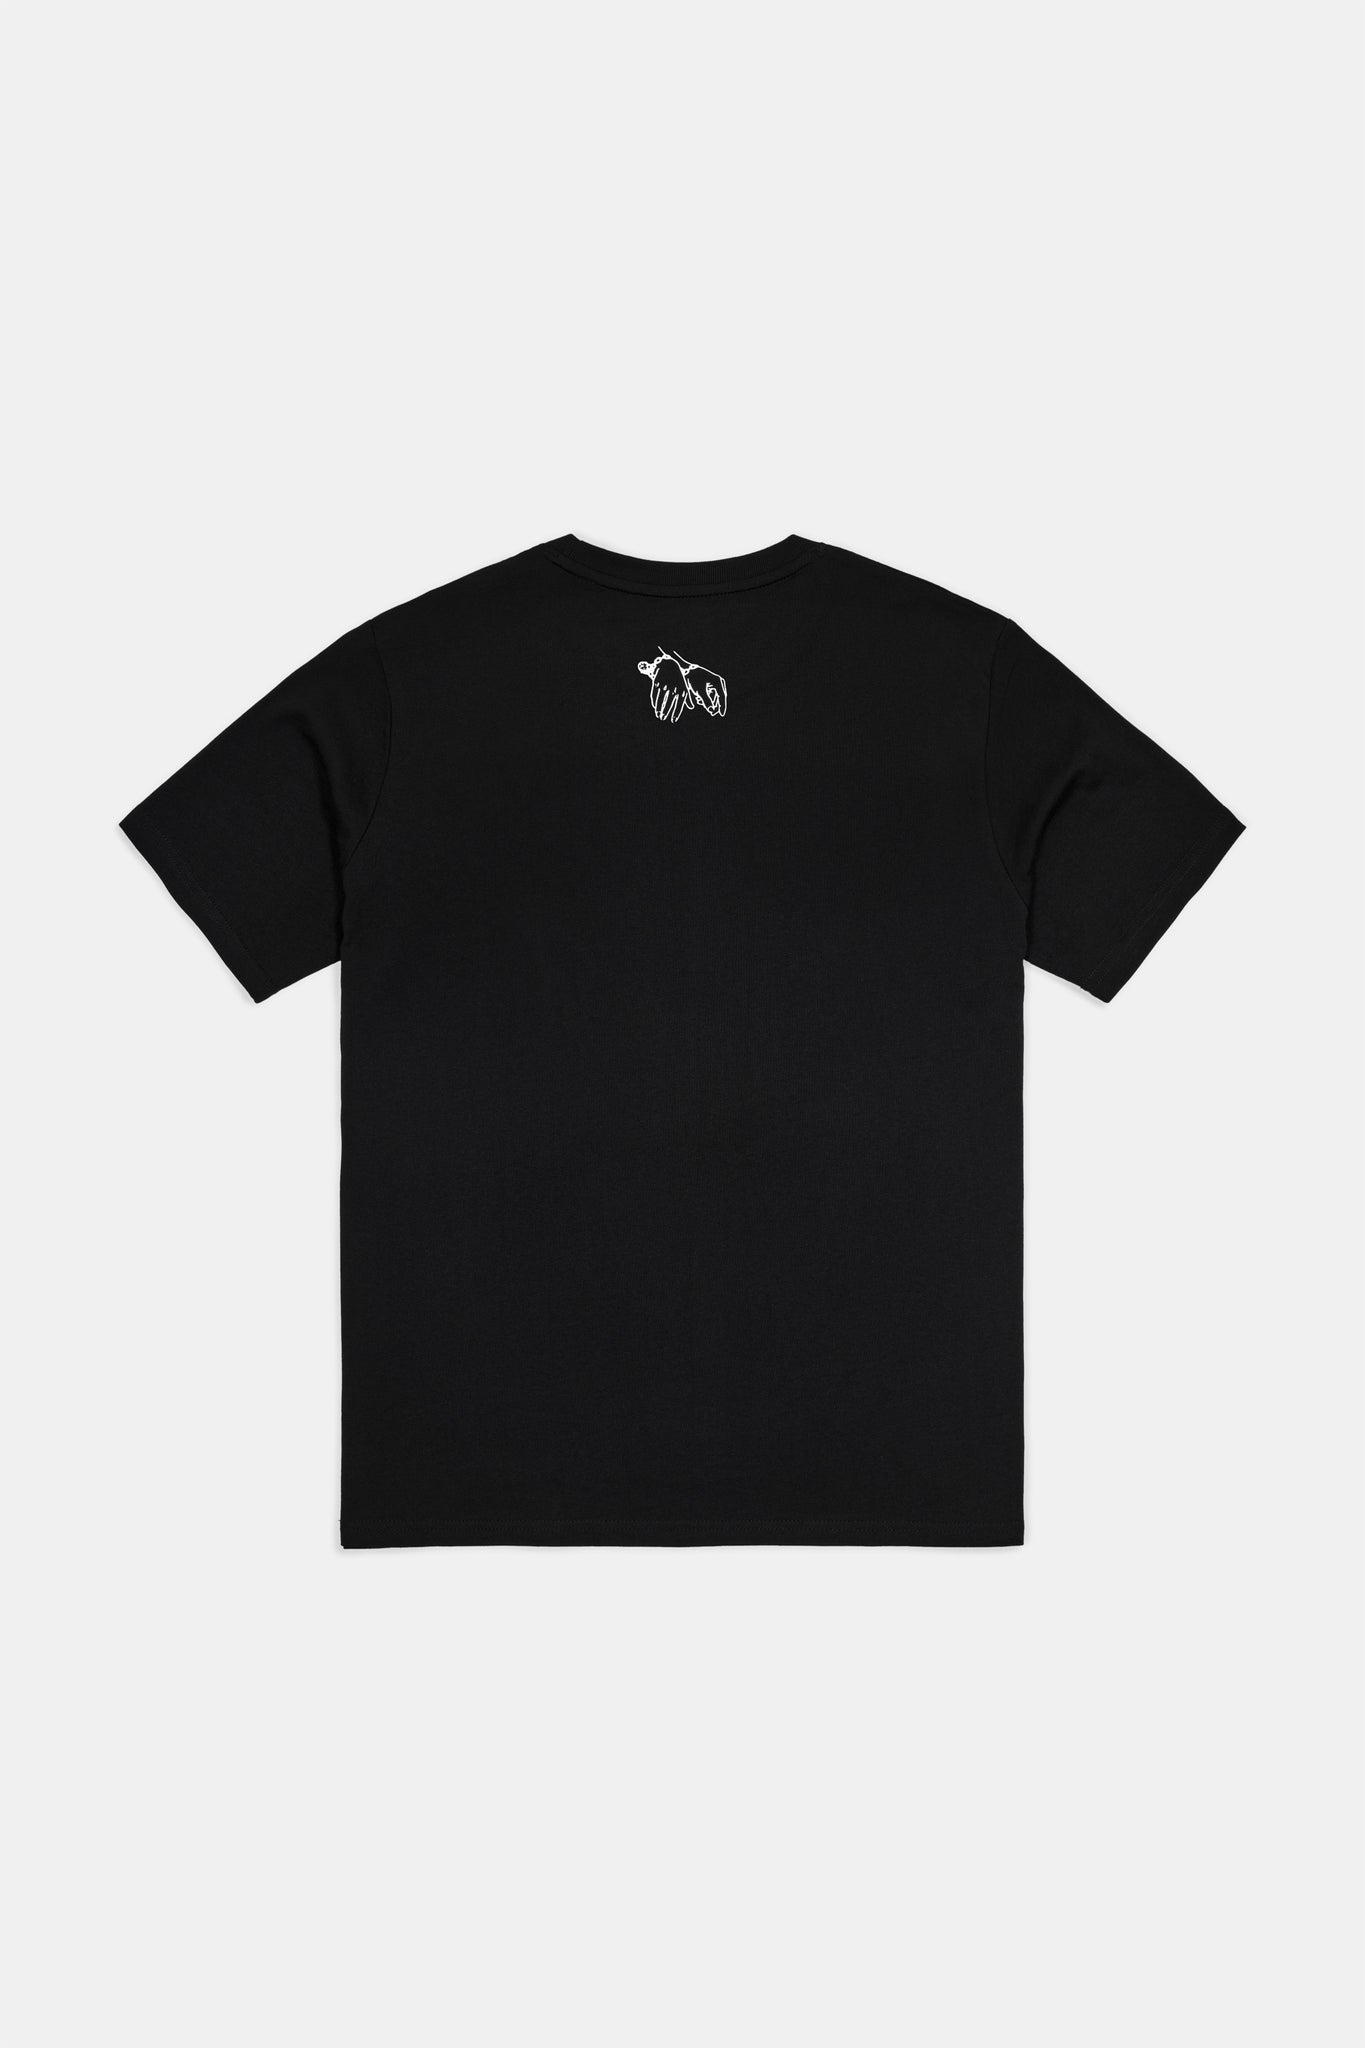 Crisis T-shirt (Black)